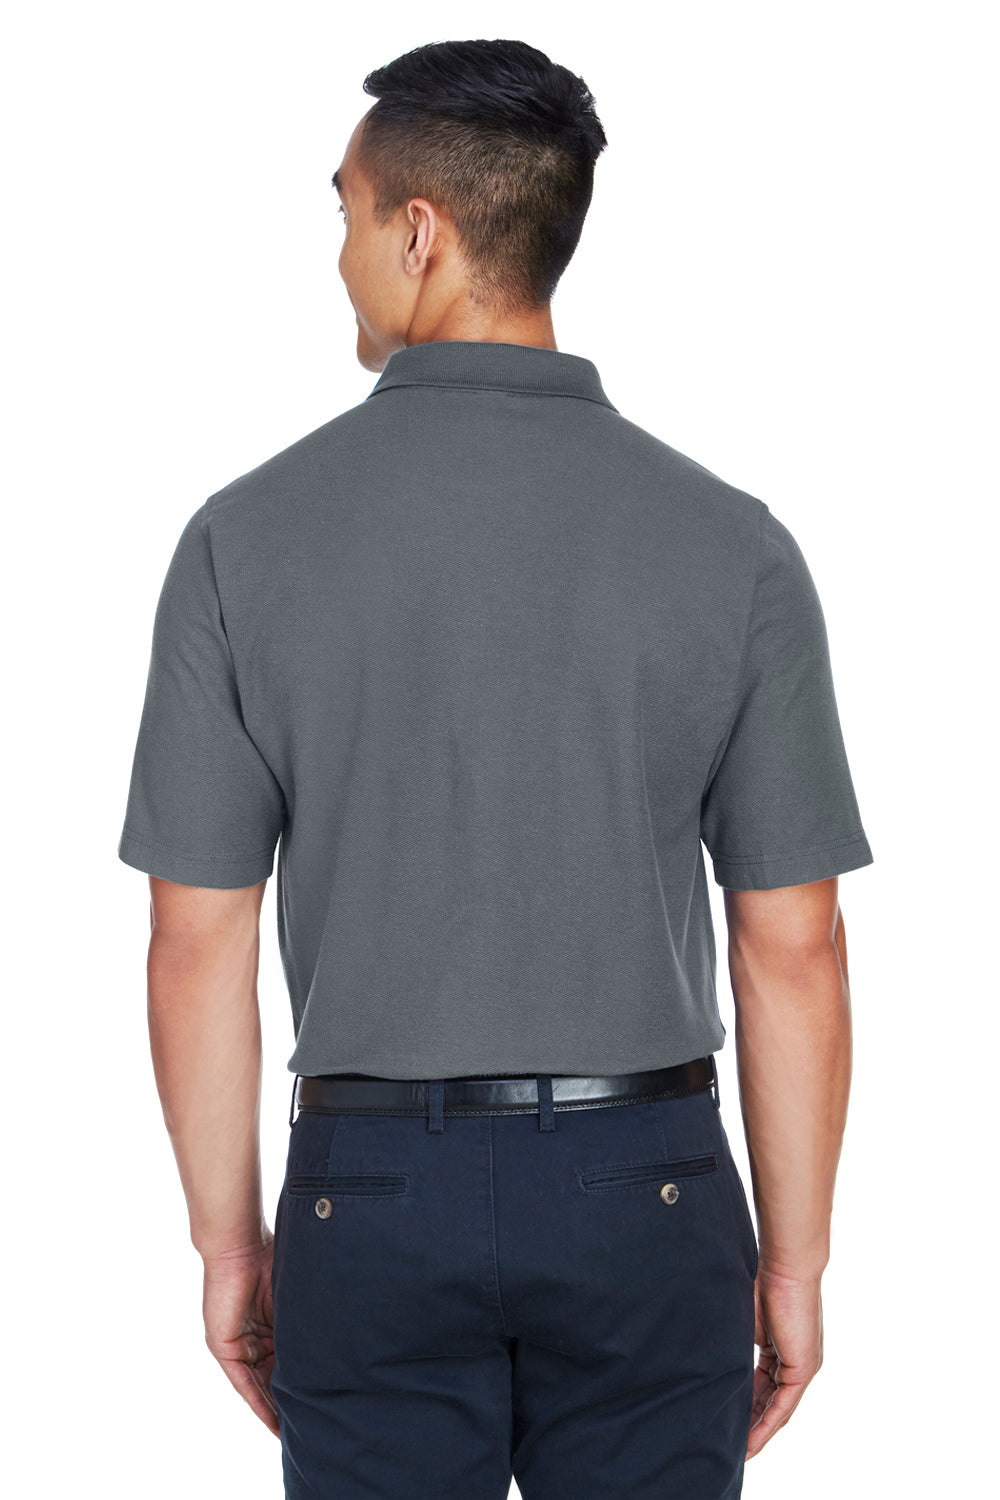 Devon & Jones DG150P Mens DryTec20 Performance Moisture Wicking Short Sleeve Polo Shirt w/ Pocket Graphite Grey Back